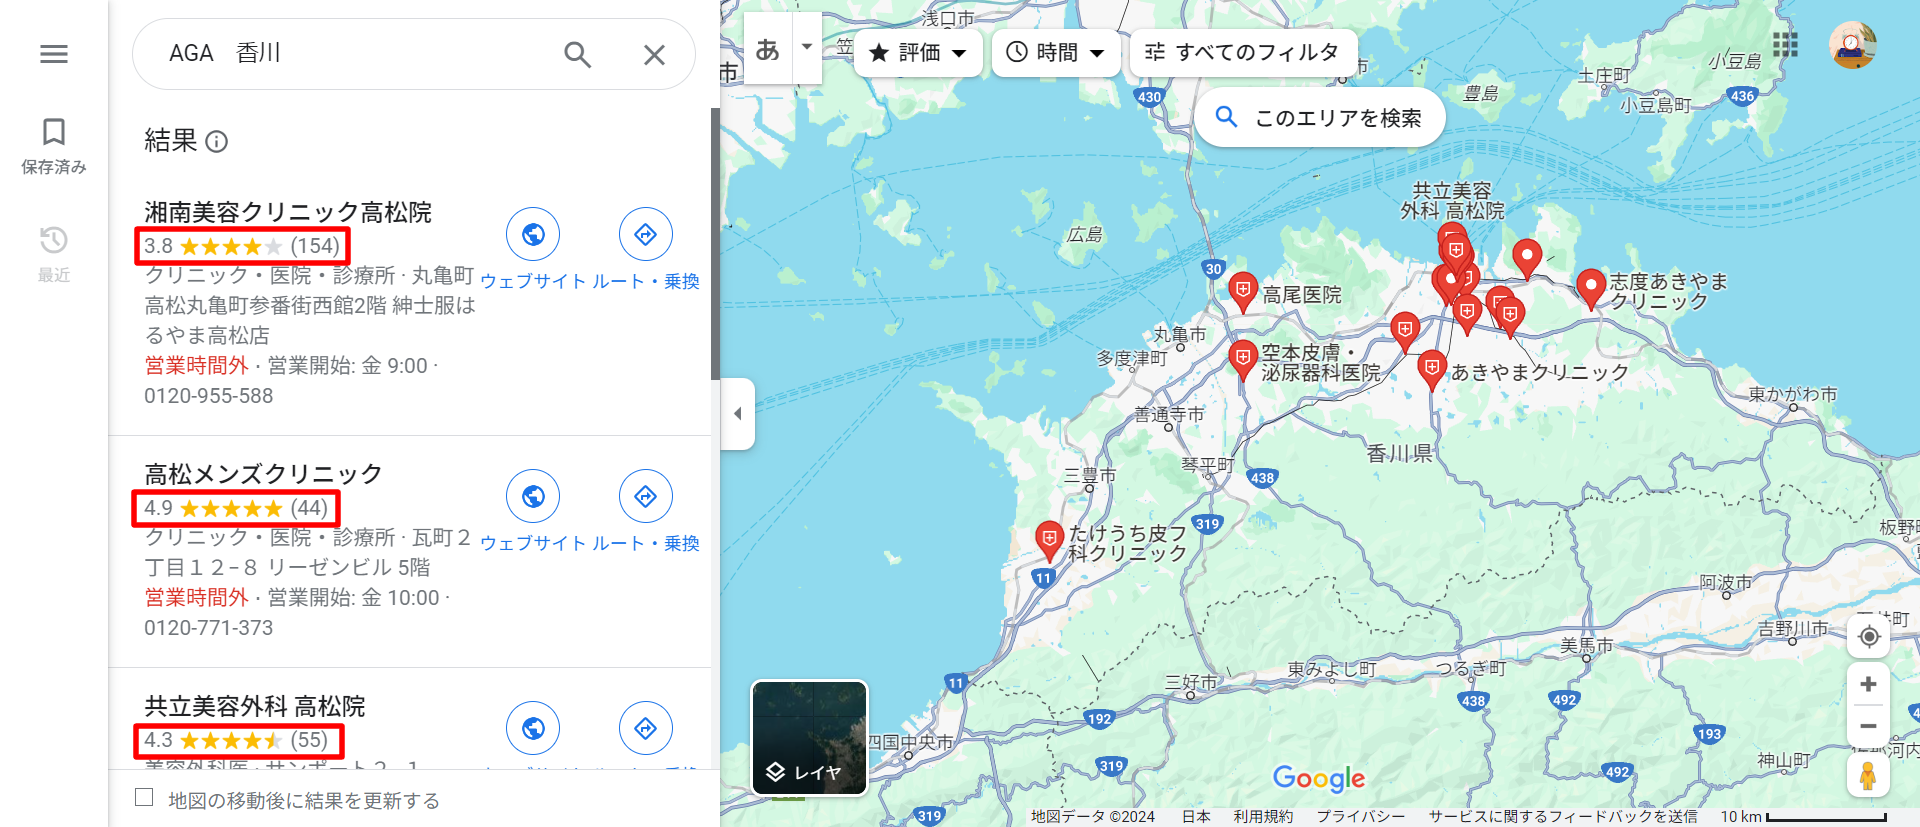 AGA-香川-Google-マップ